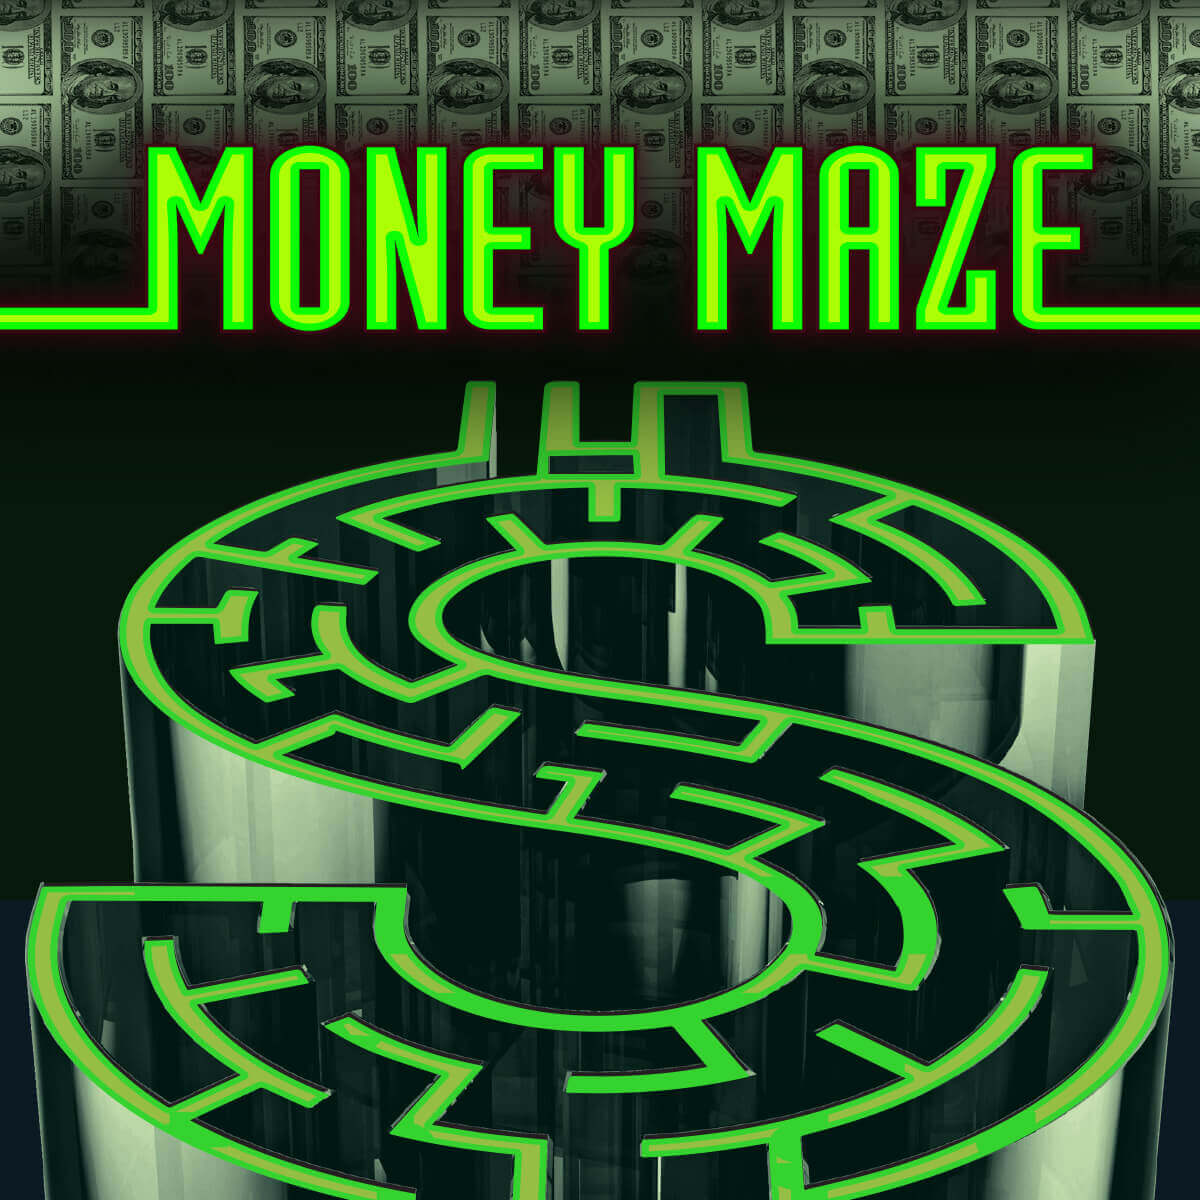 Money - Crazy Game of Life